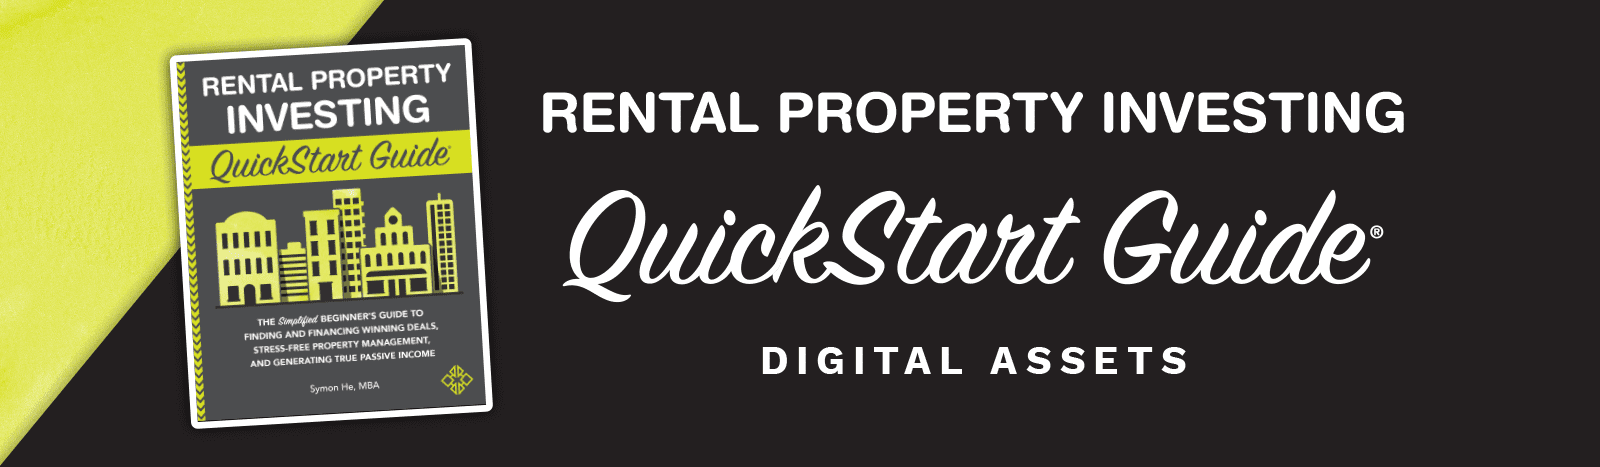 Rental Property Investing QSG Header